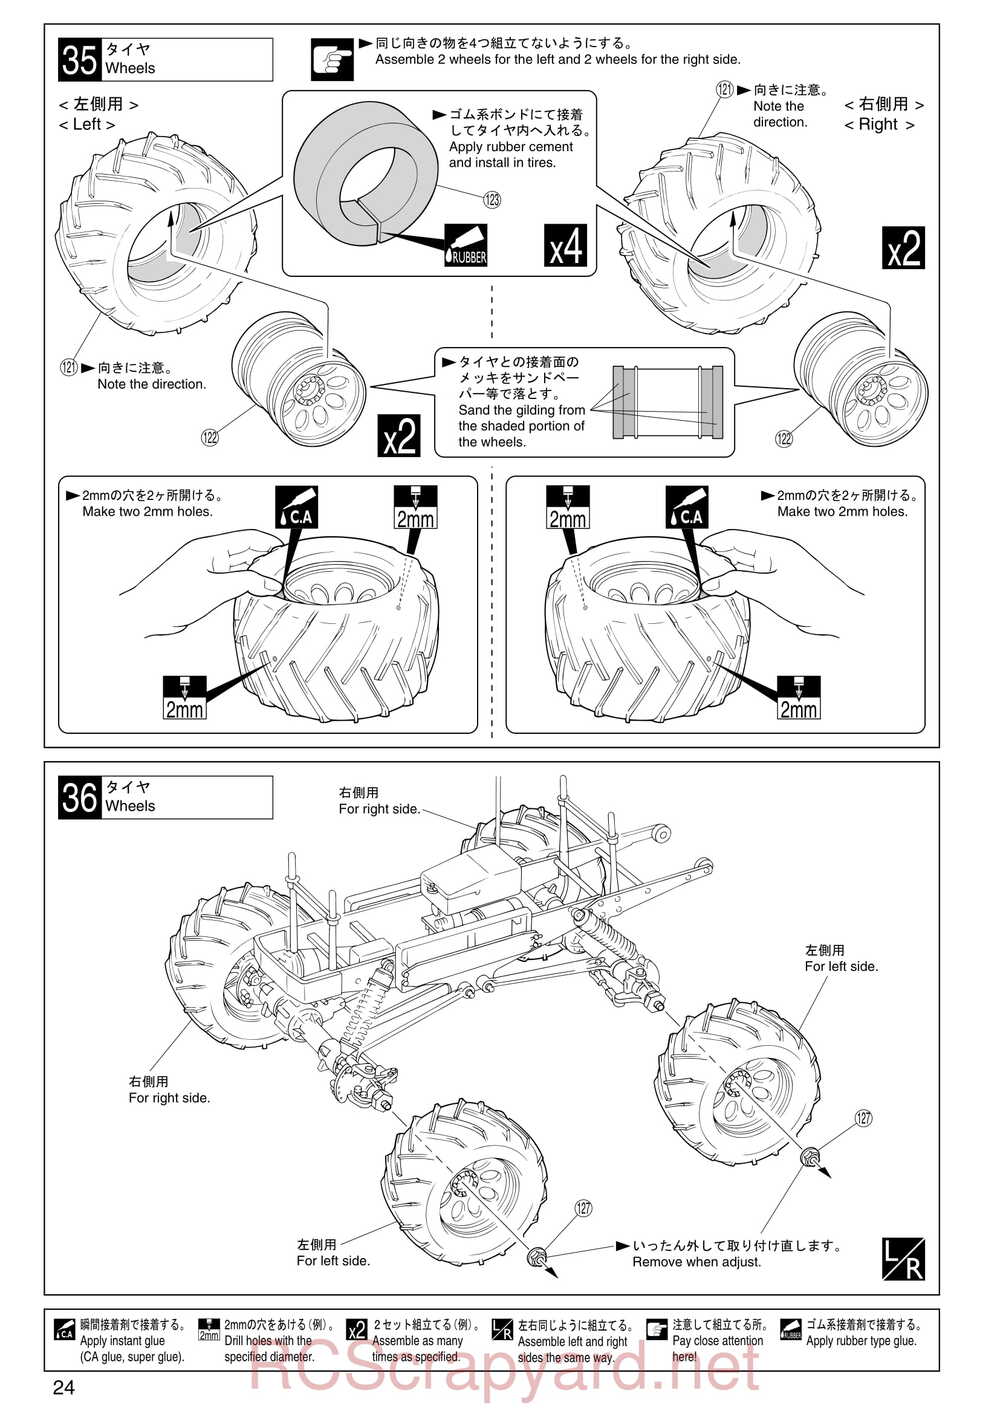 Kyosho - 30521b - Twin-Force - Manual - Page 24